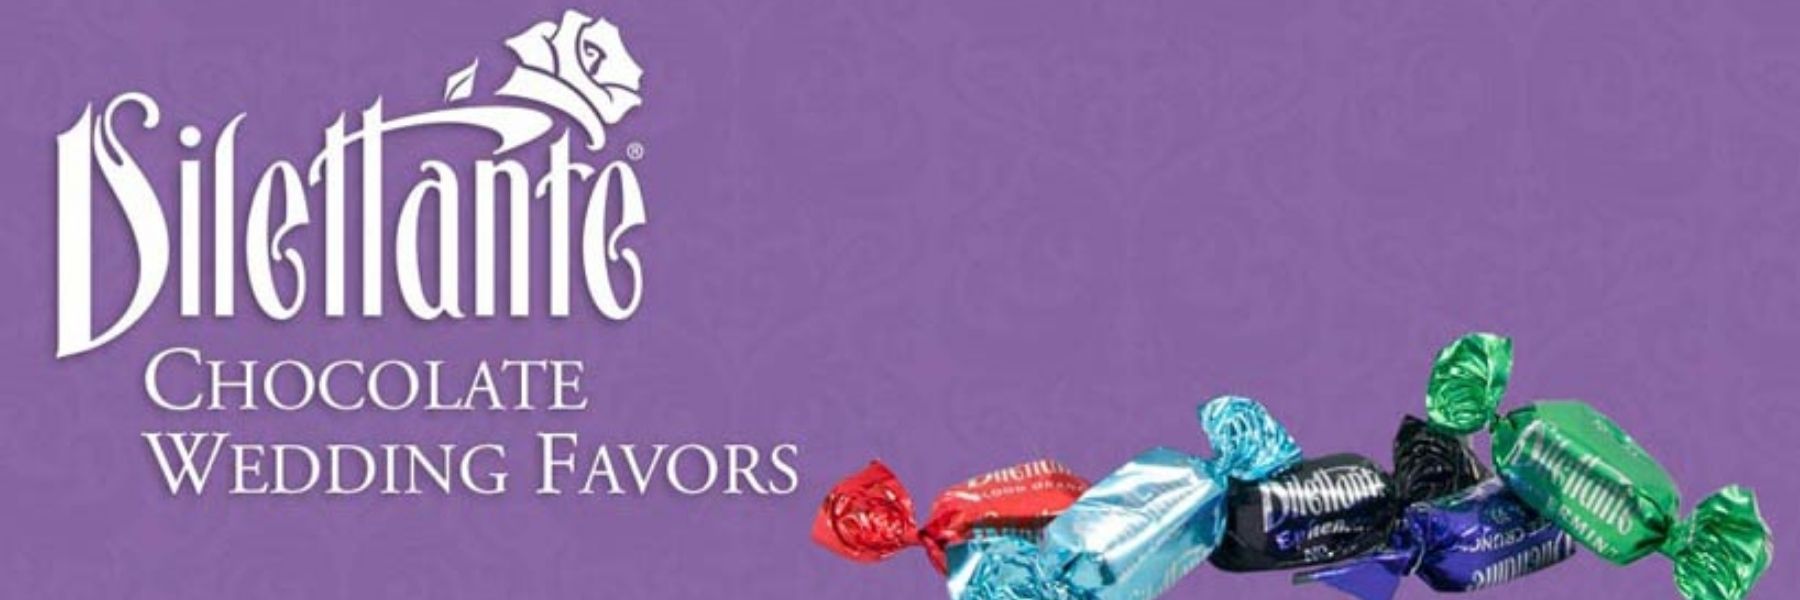 Dilettante Chocolates Chocolate Wedding Favors Blog Banner